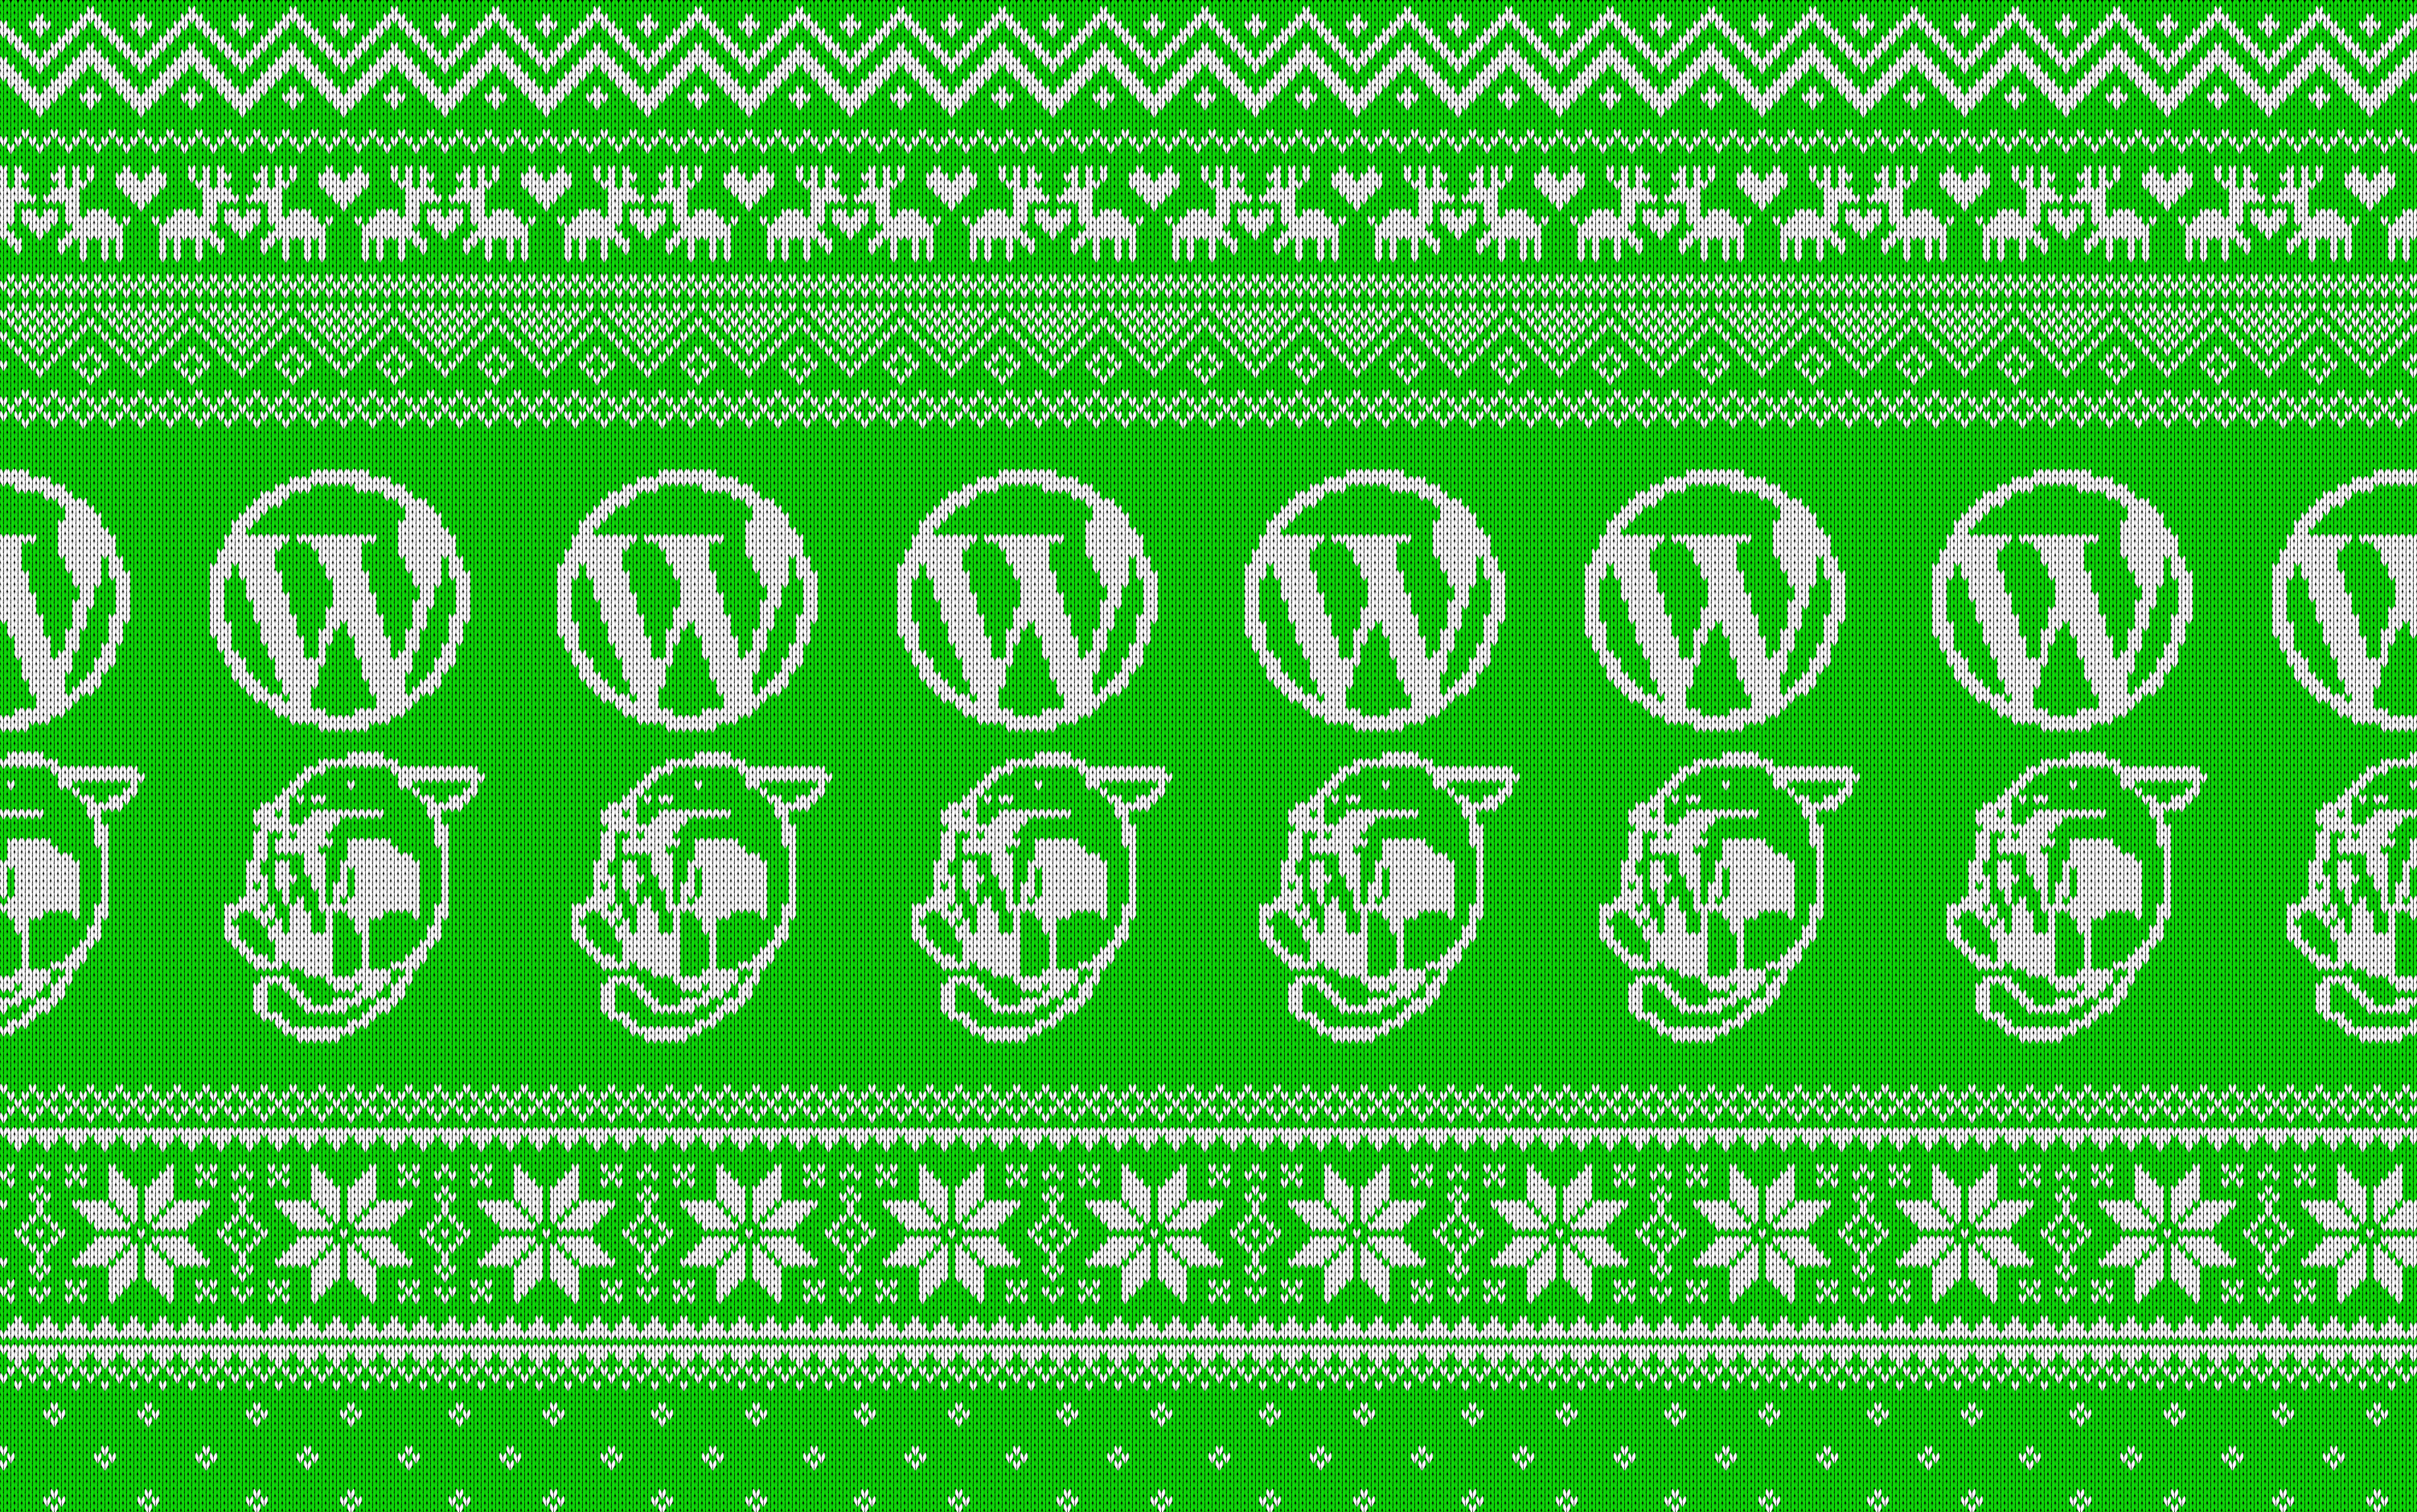 WordPress Ugly Christmas Sweater Wallpaper. @TwisterMc